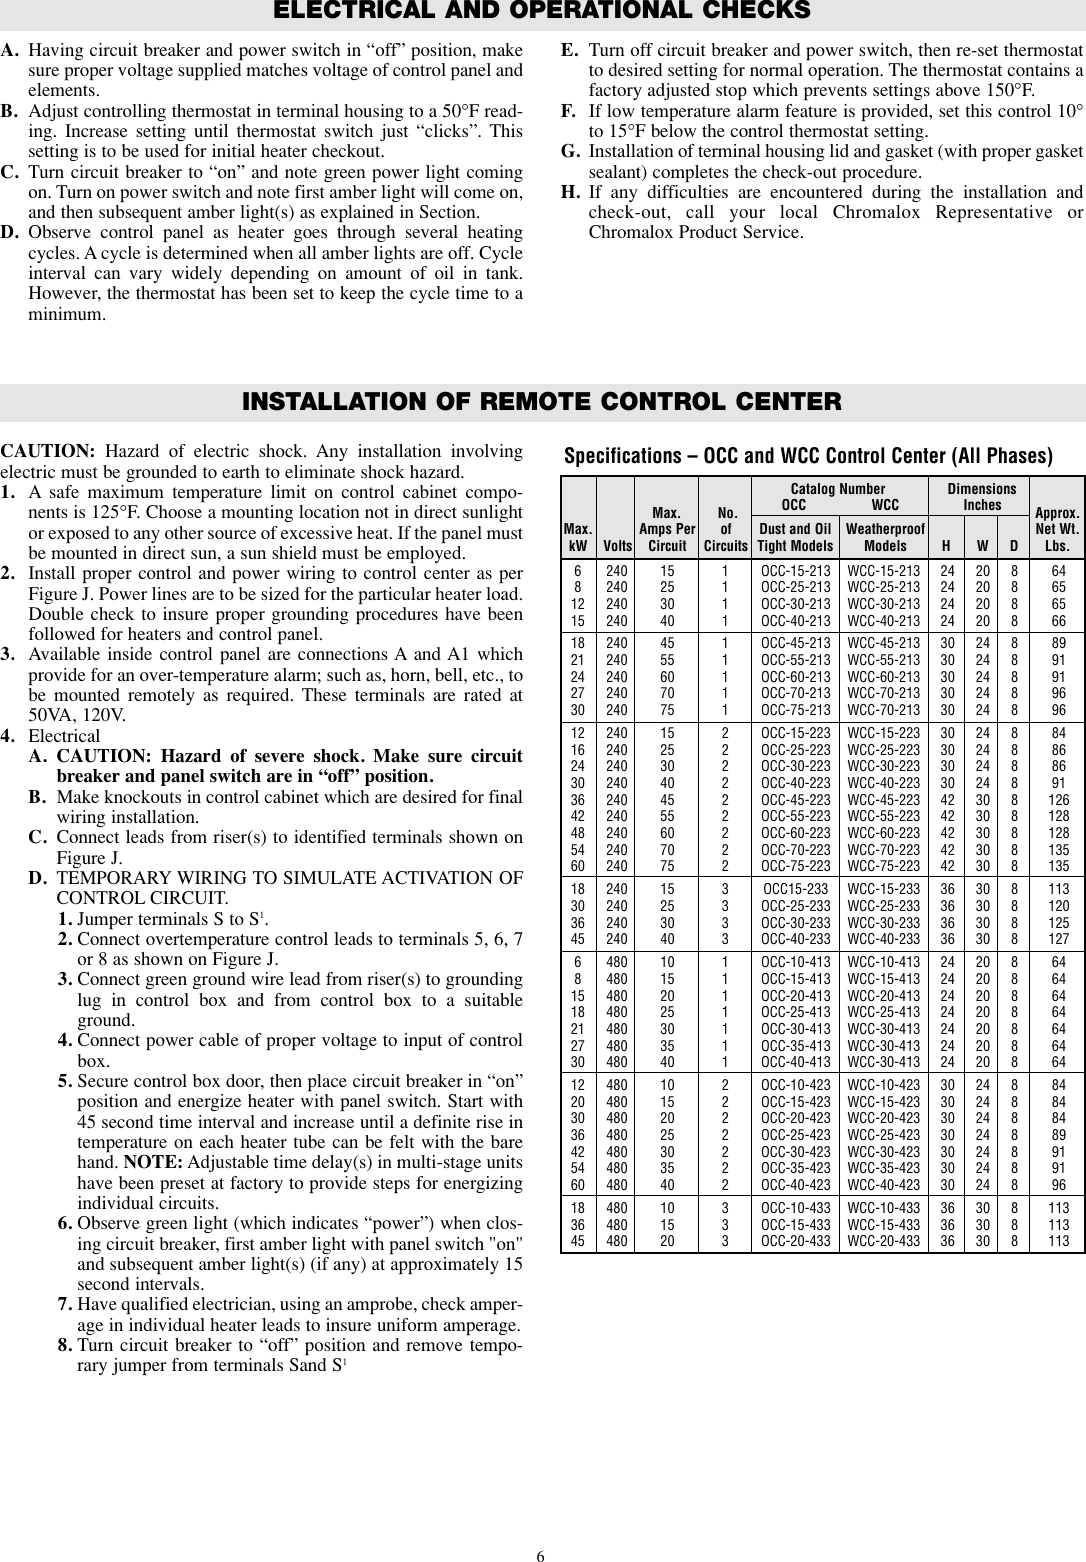 Page 6 of 12 - Chromalox Chromalox-Fxth-Pn401-Users-Manual- PN401 CHX  Chromalox-fxth-pn401-users-manual